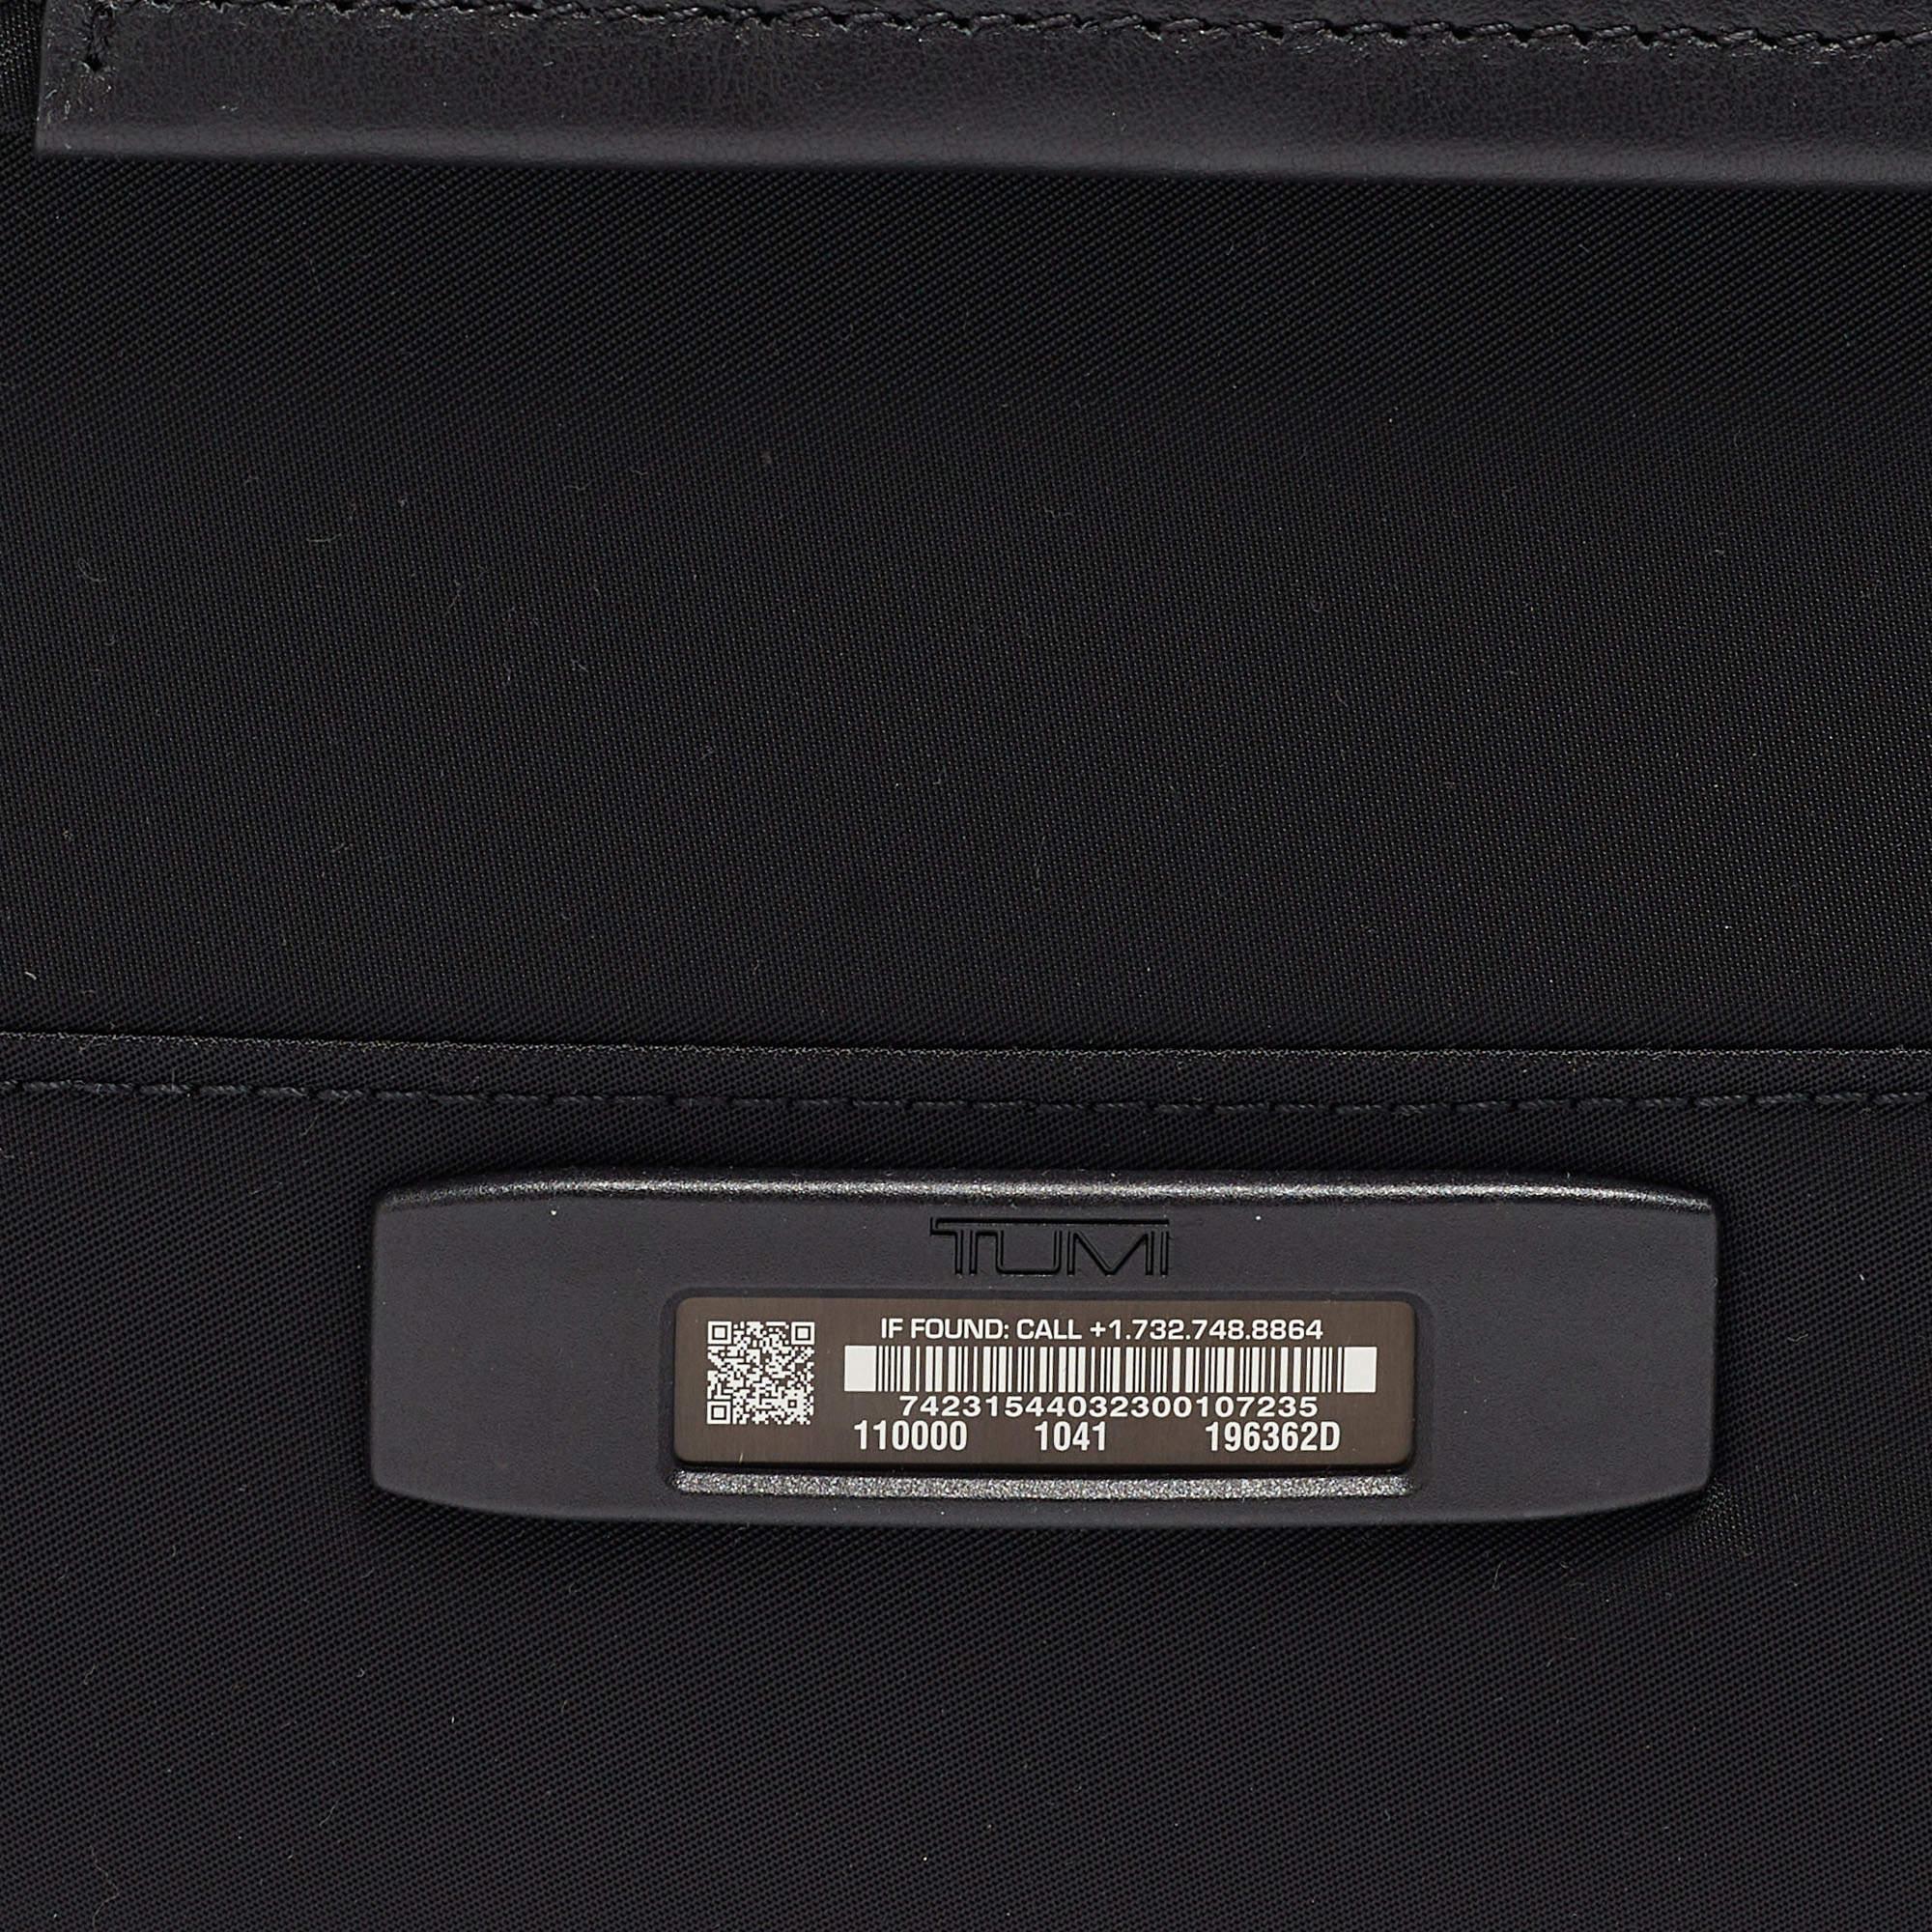 TUMI Black Nylon Compact Oxford Carry On Luggage 3